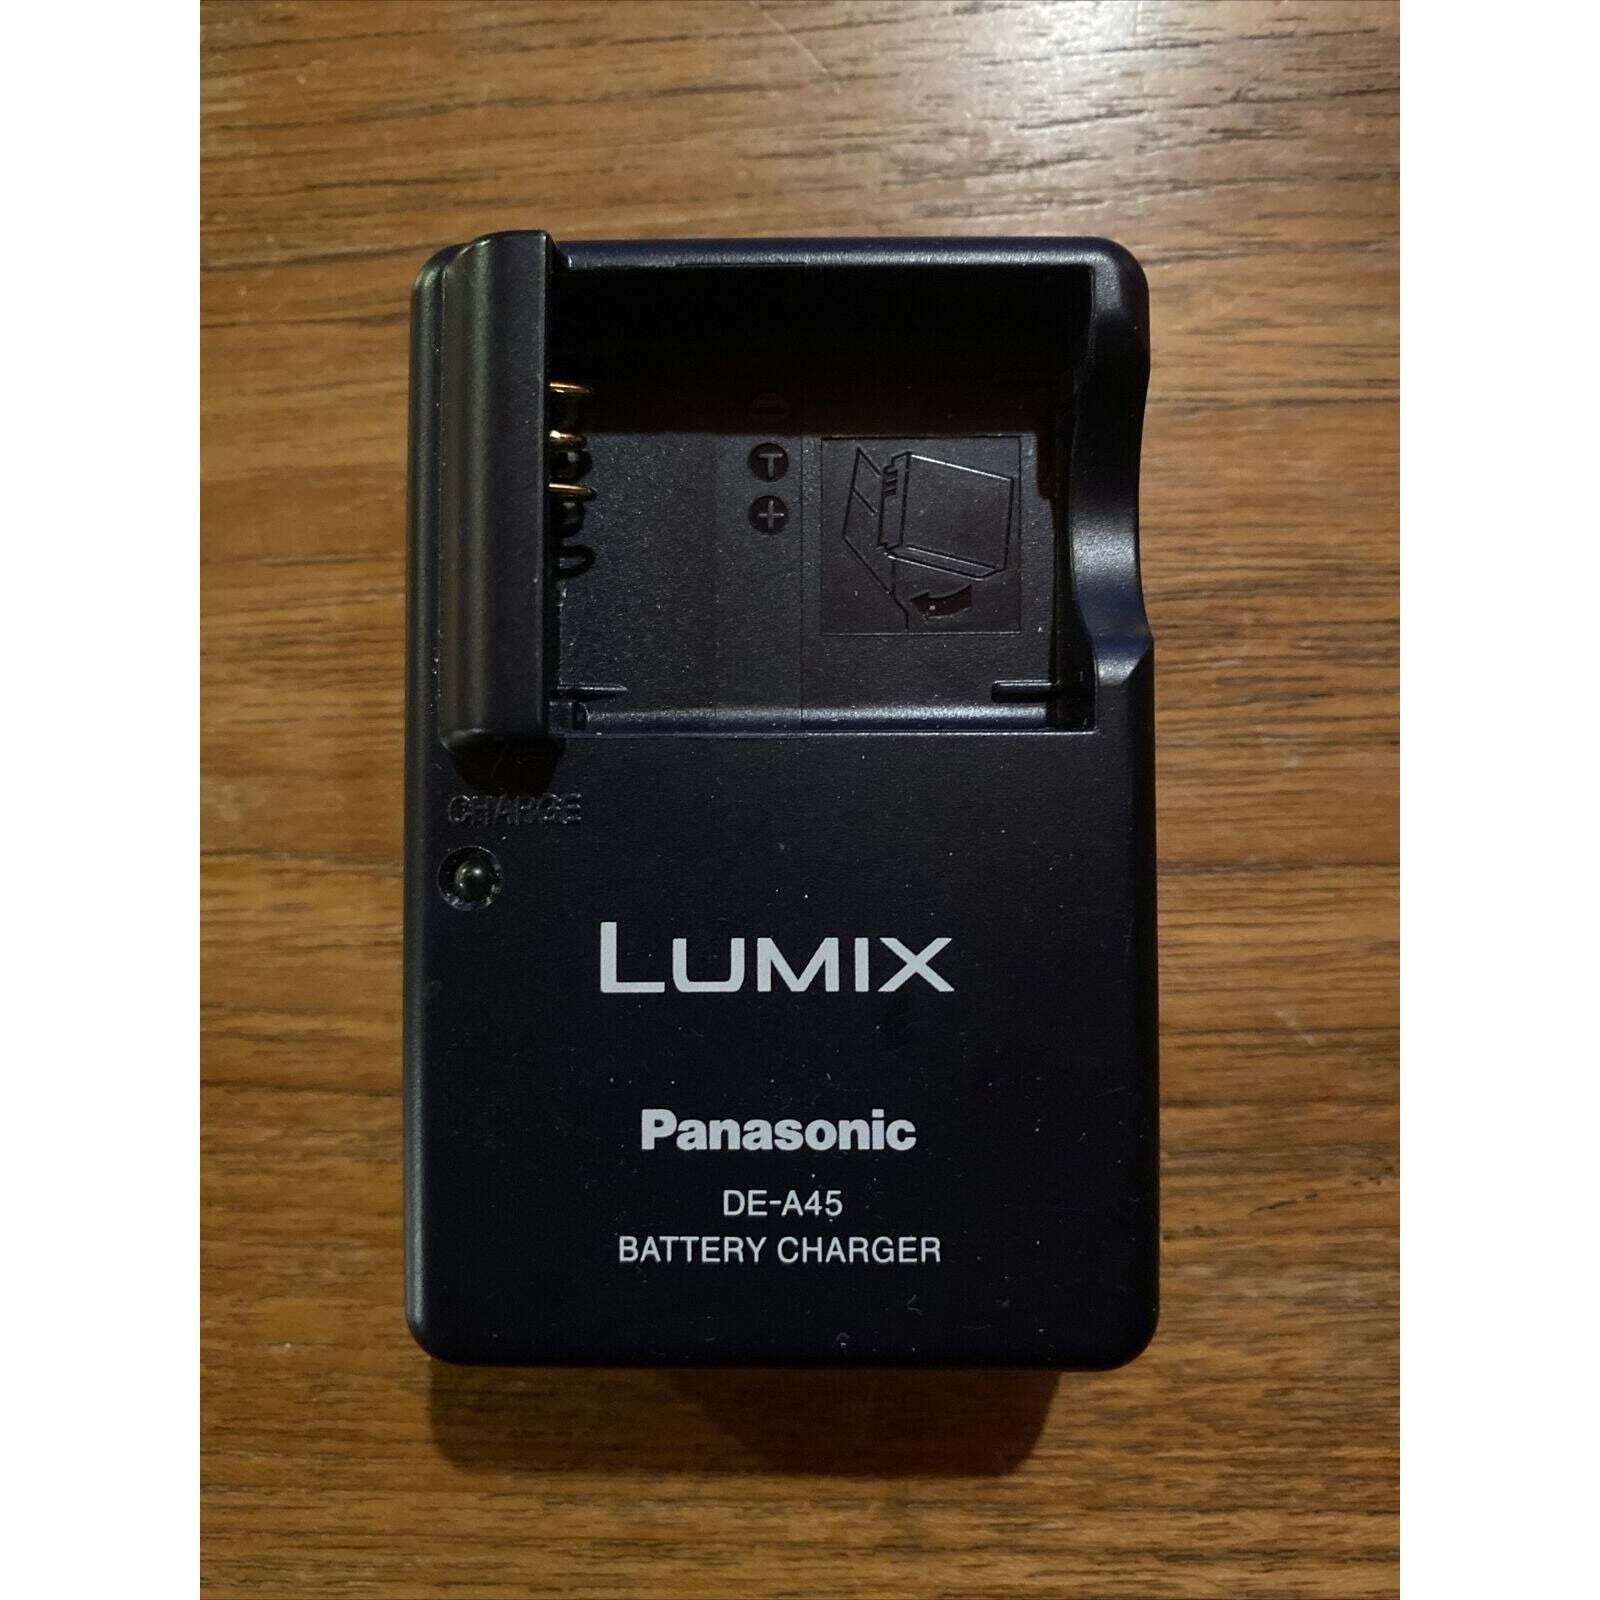 Panasonic Lumix DE-A45B Camera Battery Charger